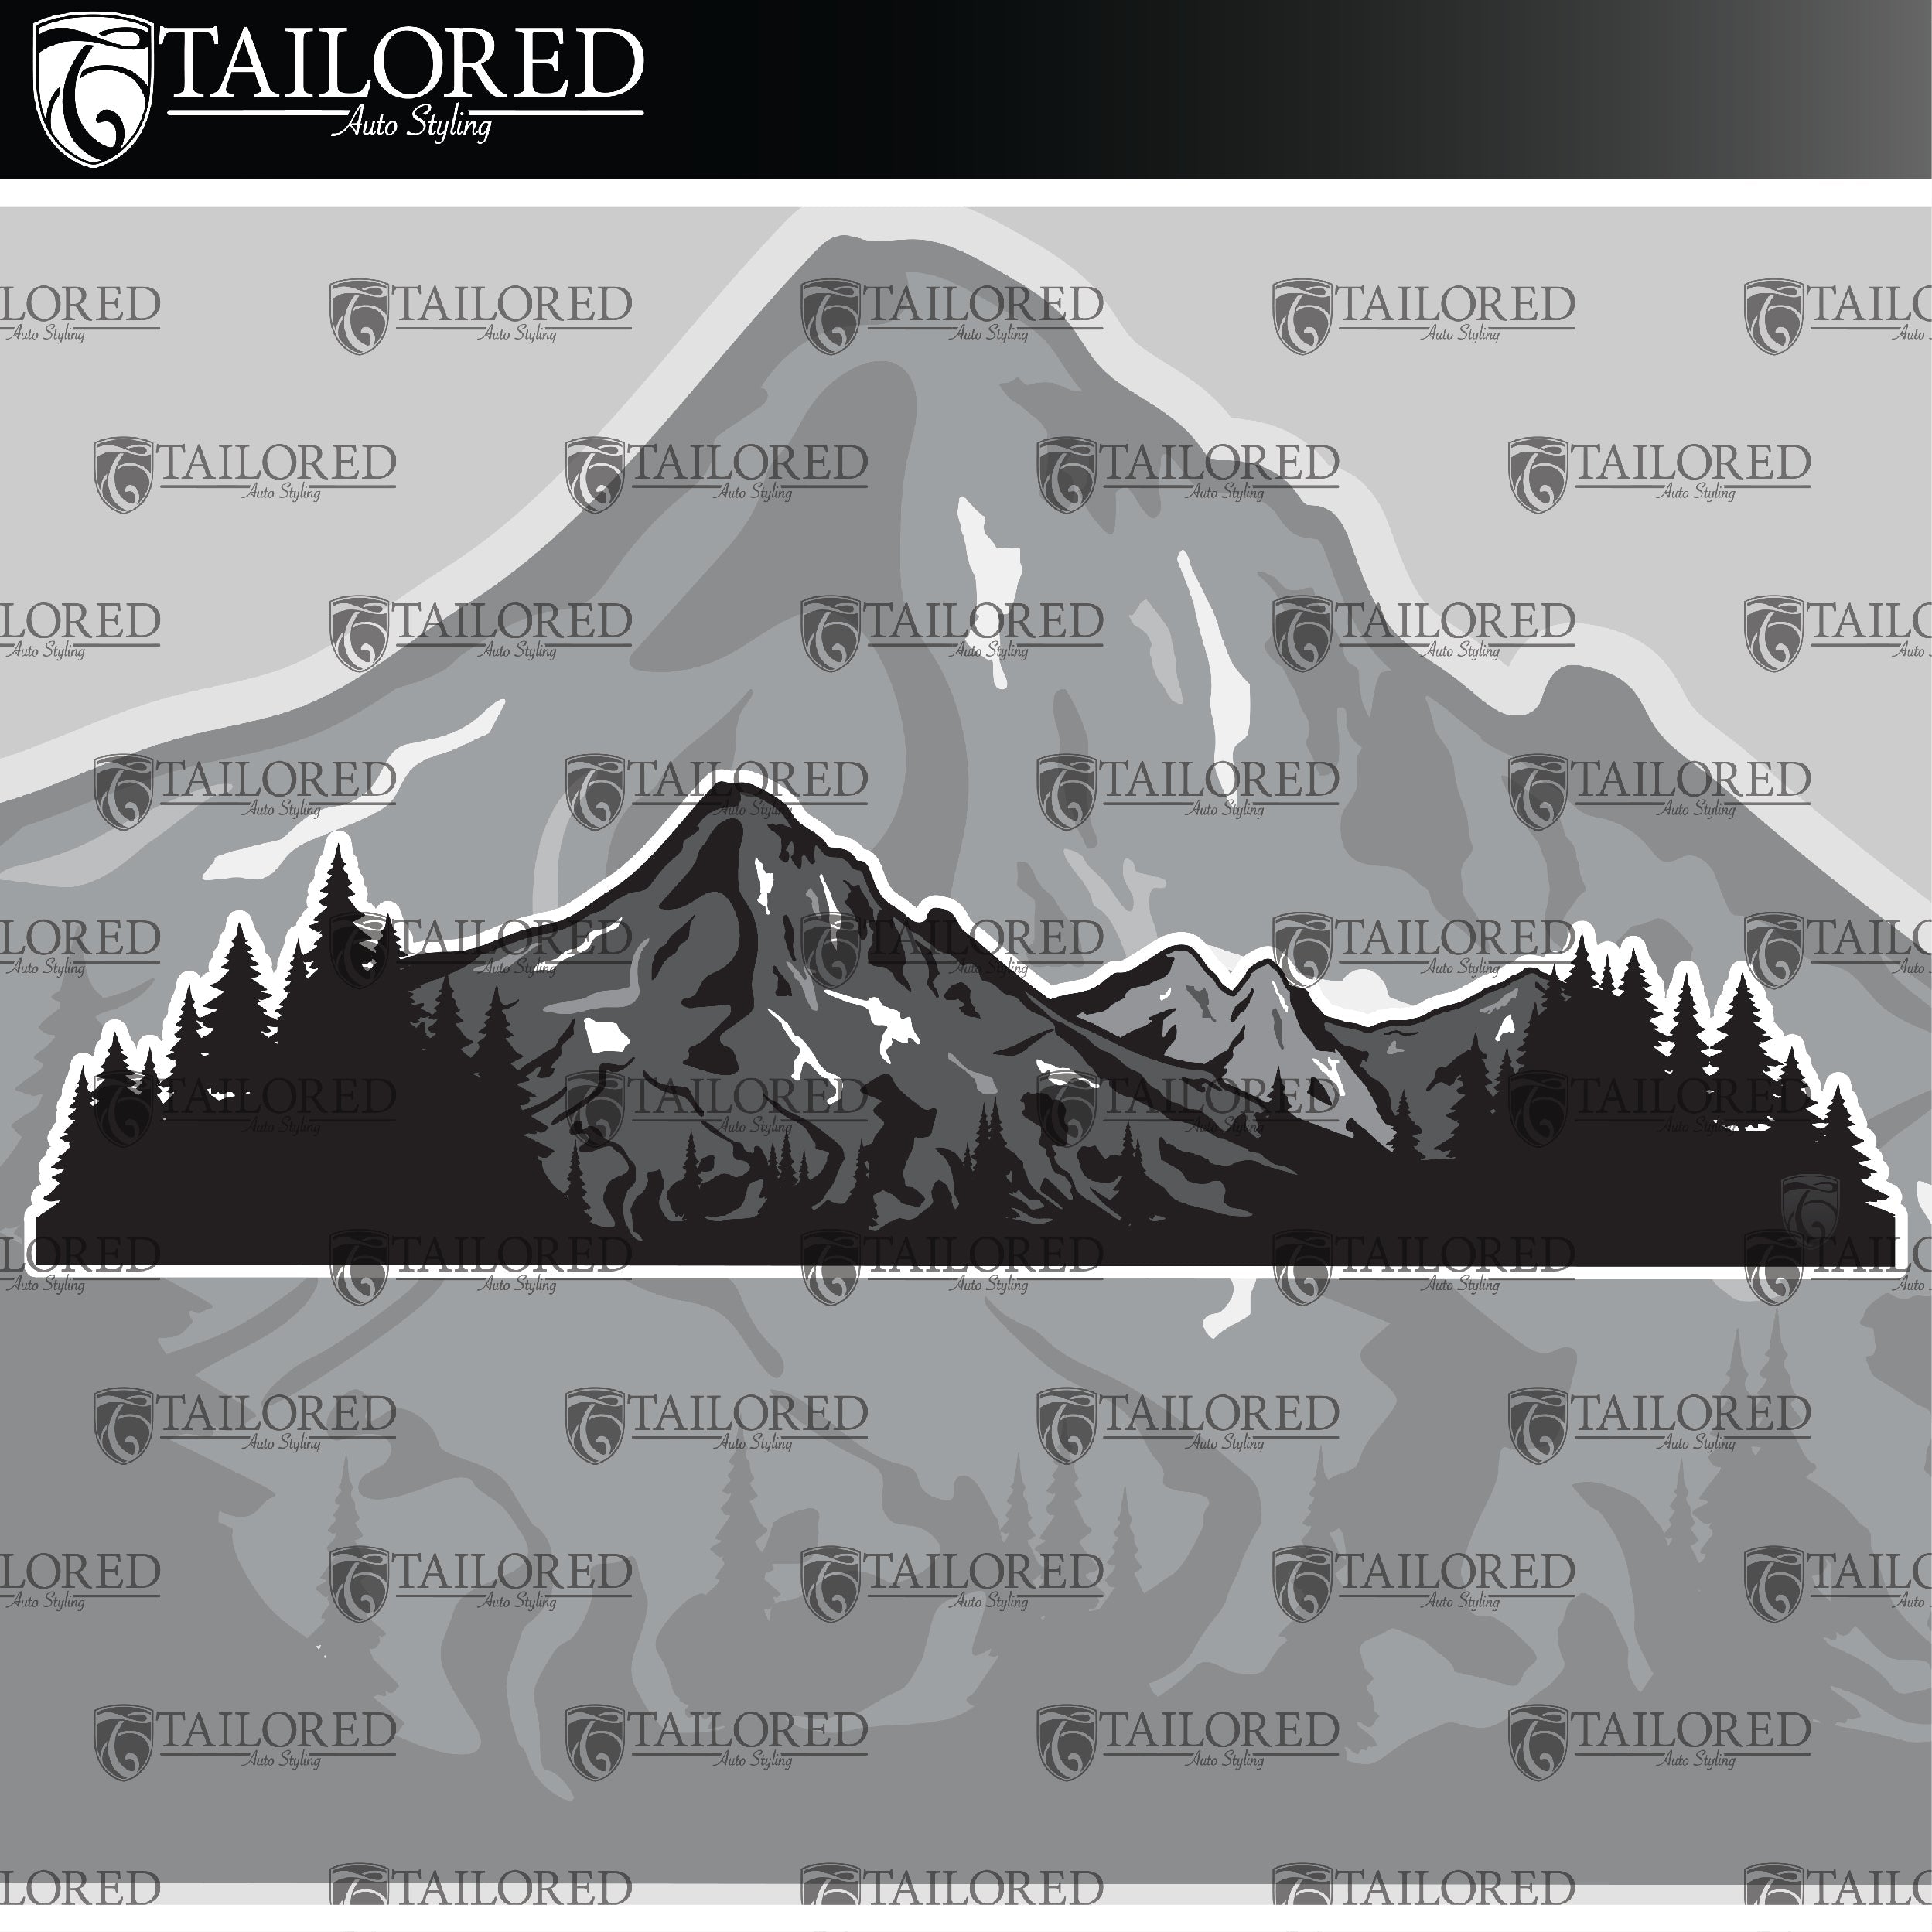 Universal Mountain Window Banner + Sticker Pack